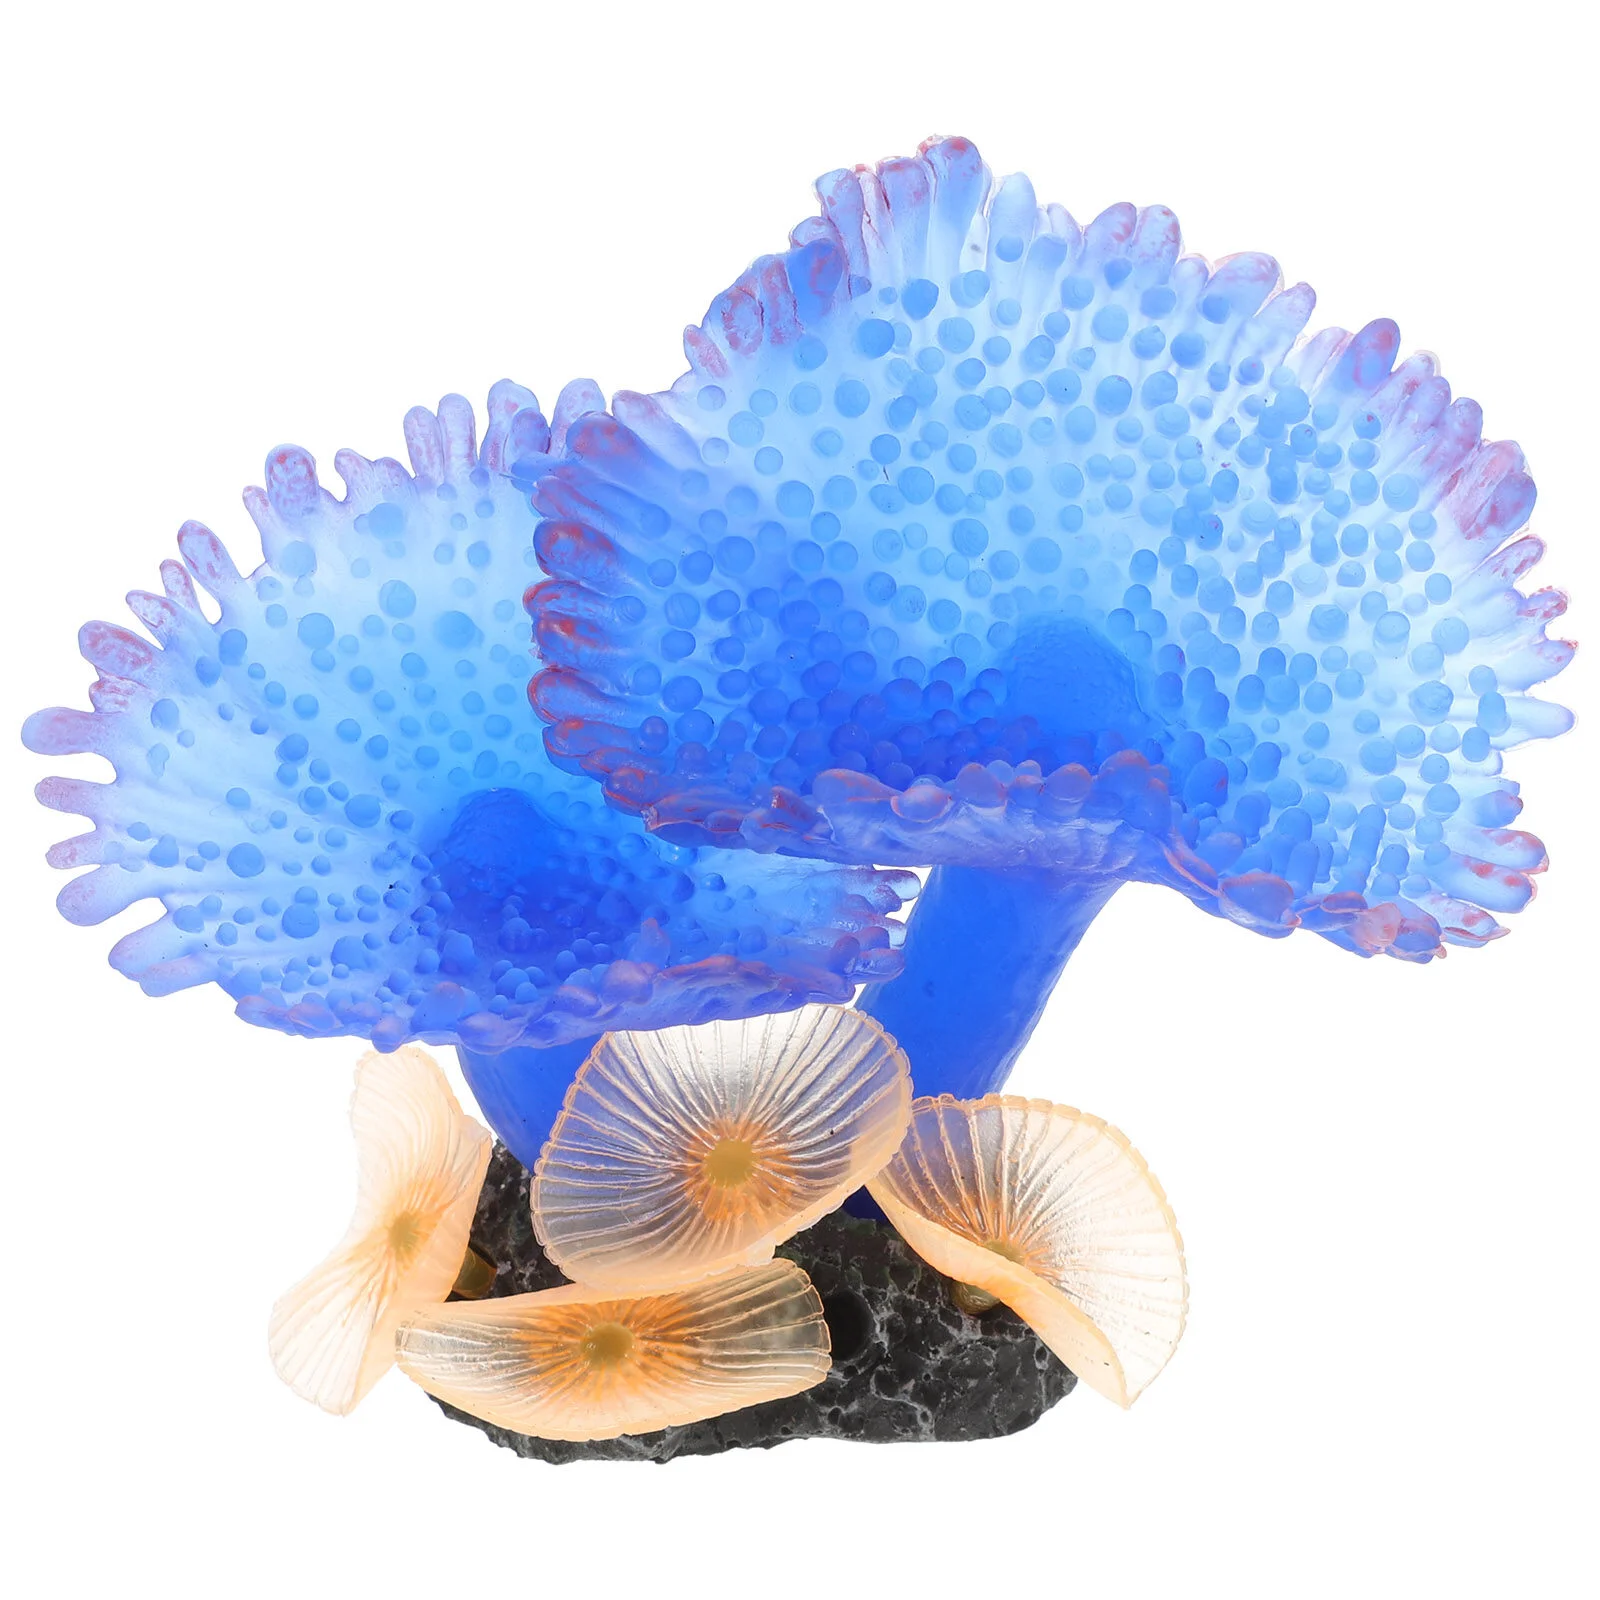 

Fish Tank Silicone Coral Aquarium Decor Figurine Desktop Sculpture Simulated Decorative Silica Gel Ornament Plants